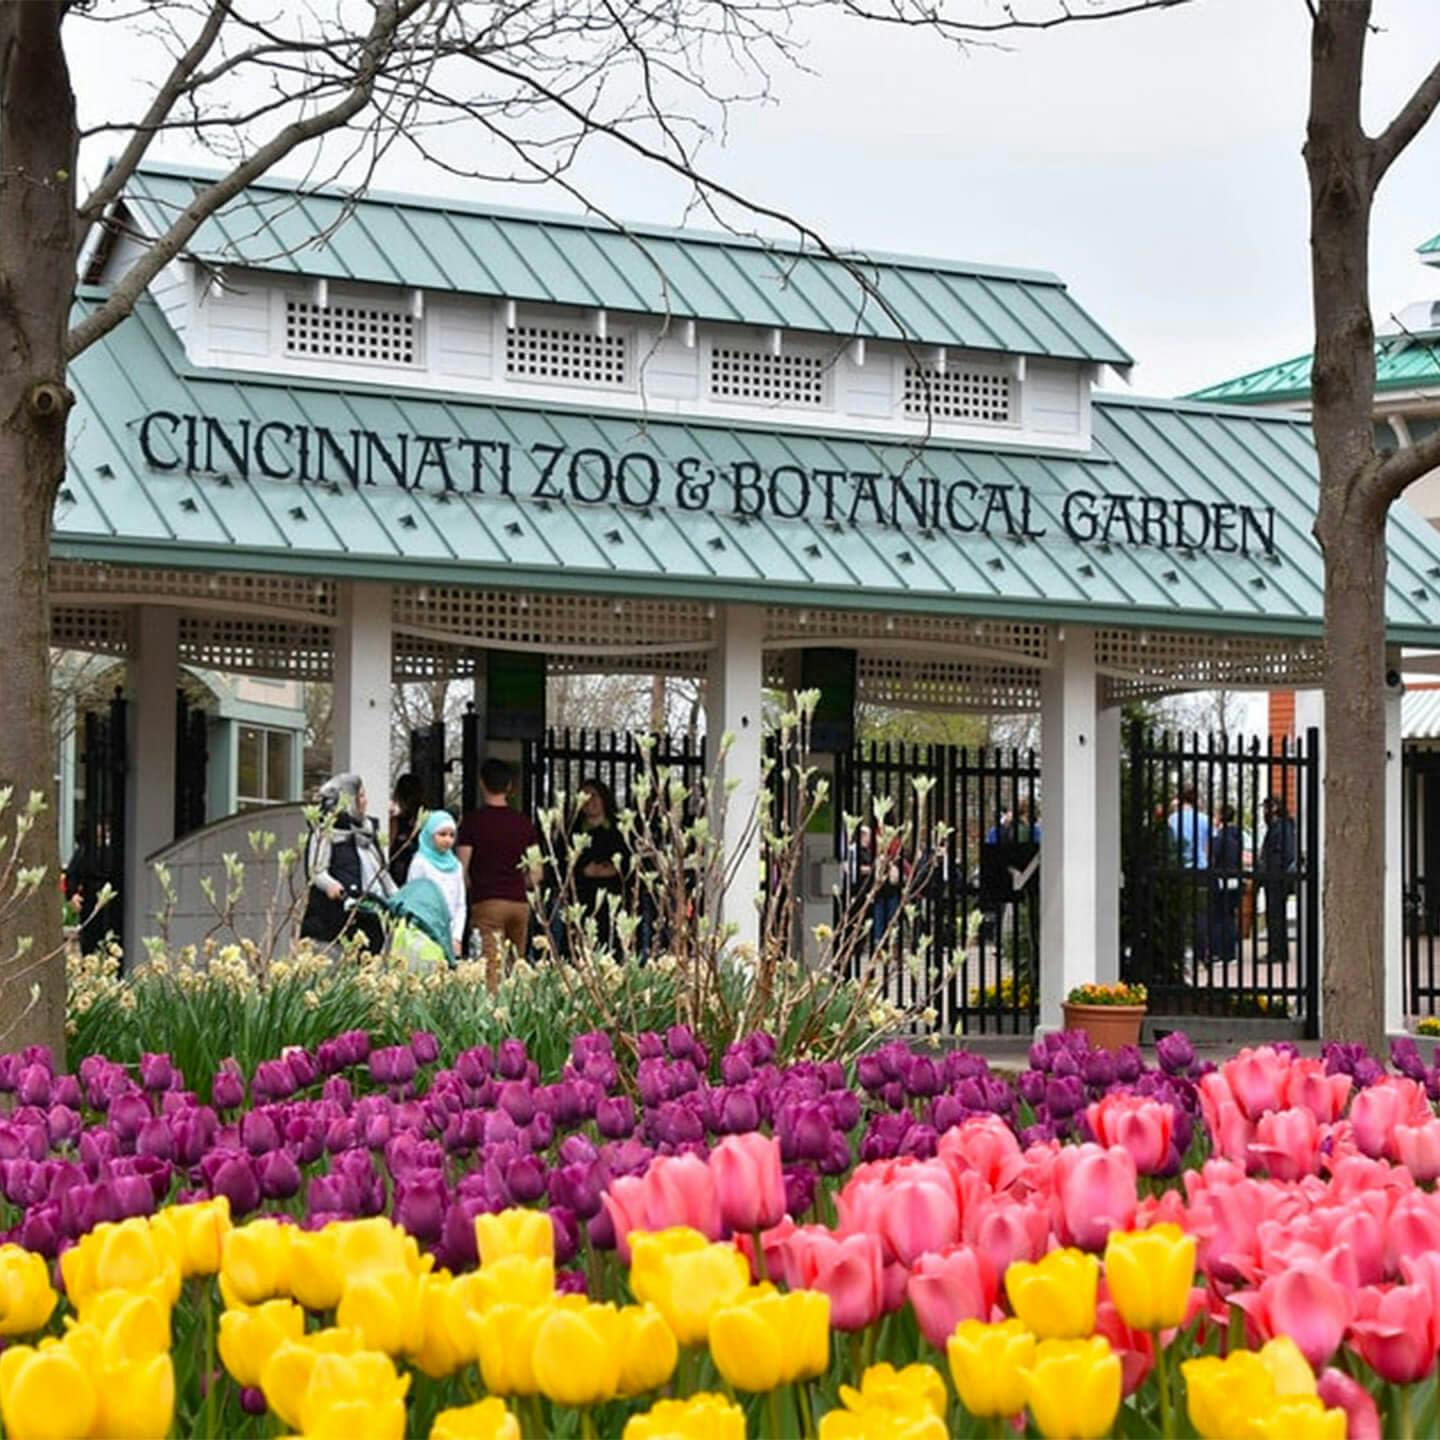 Cincinnati Zoo and Botanical Garden's entrance